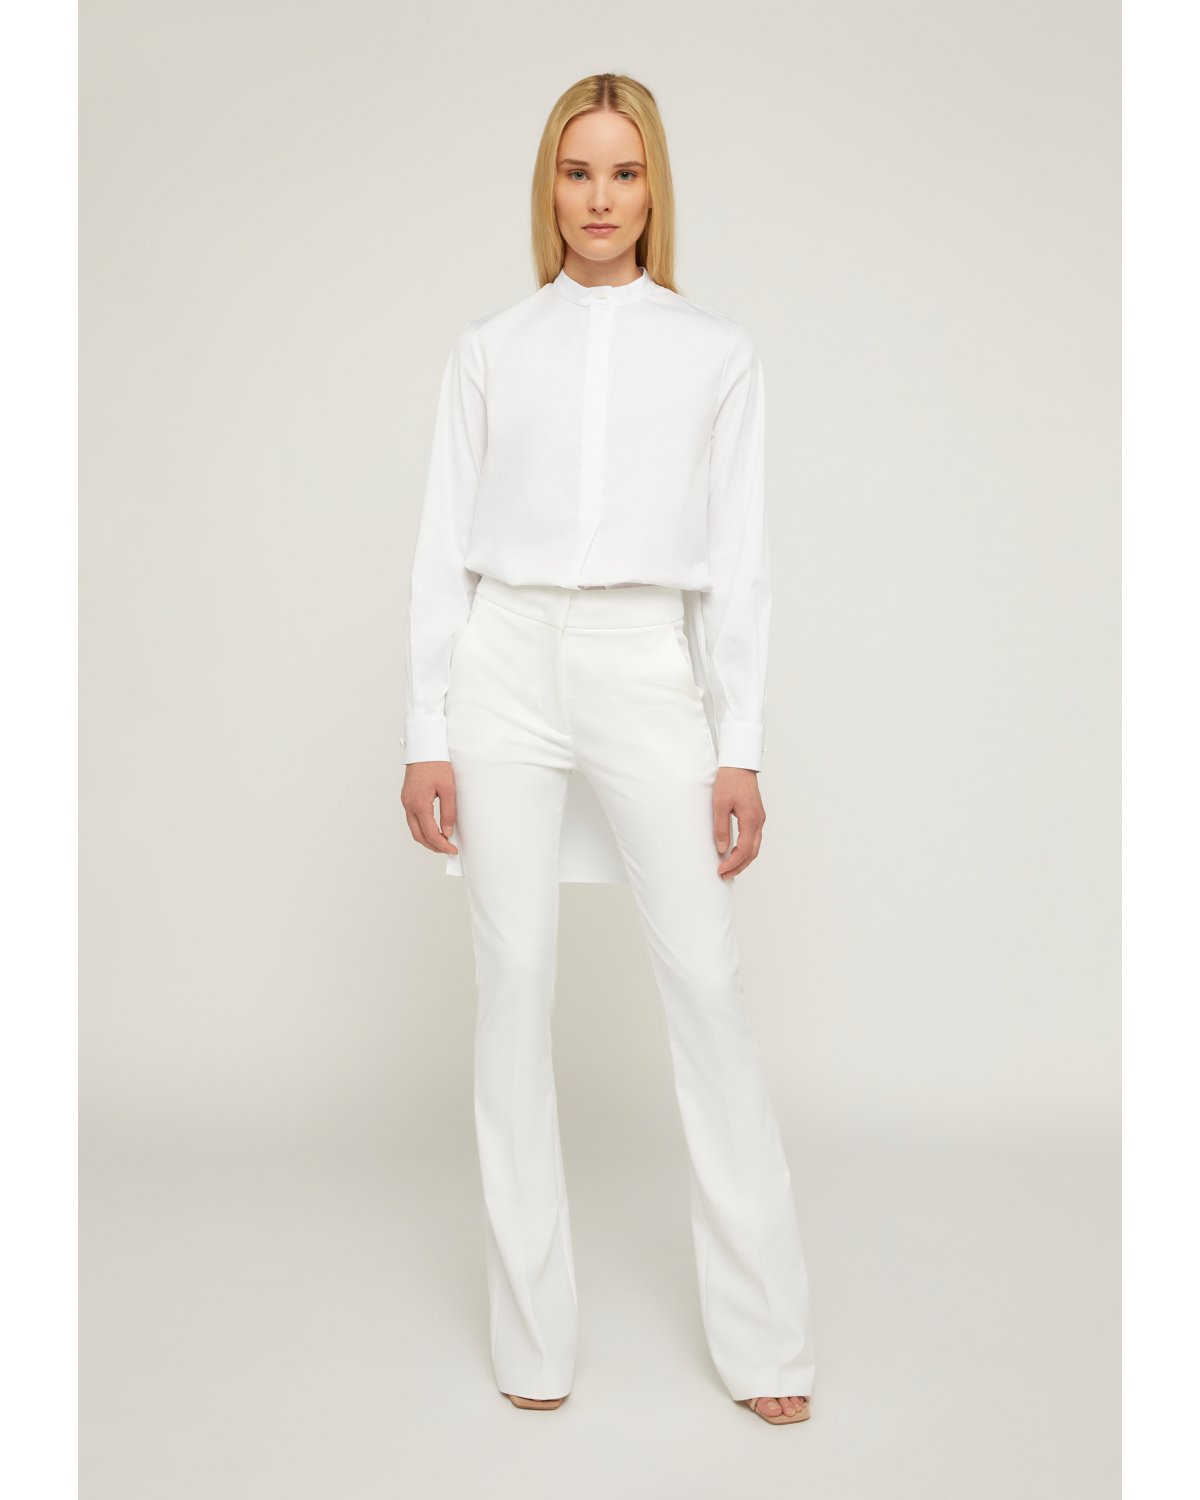 Mandarin collar white shirt | 73_74 | Genny